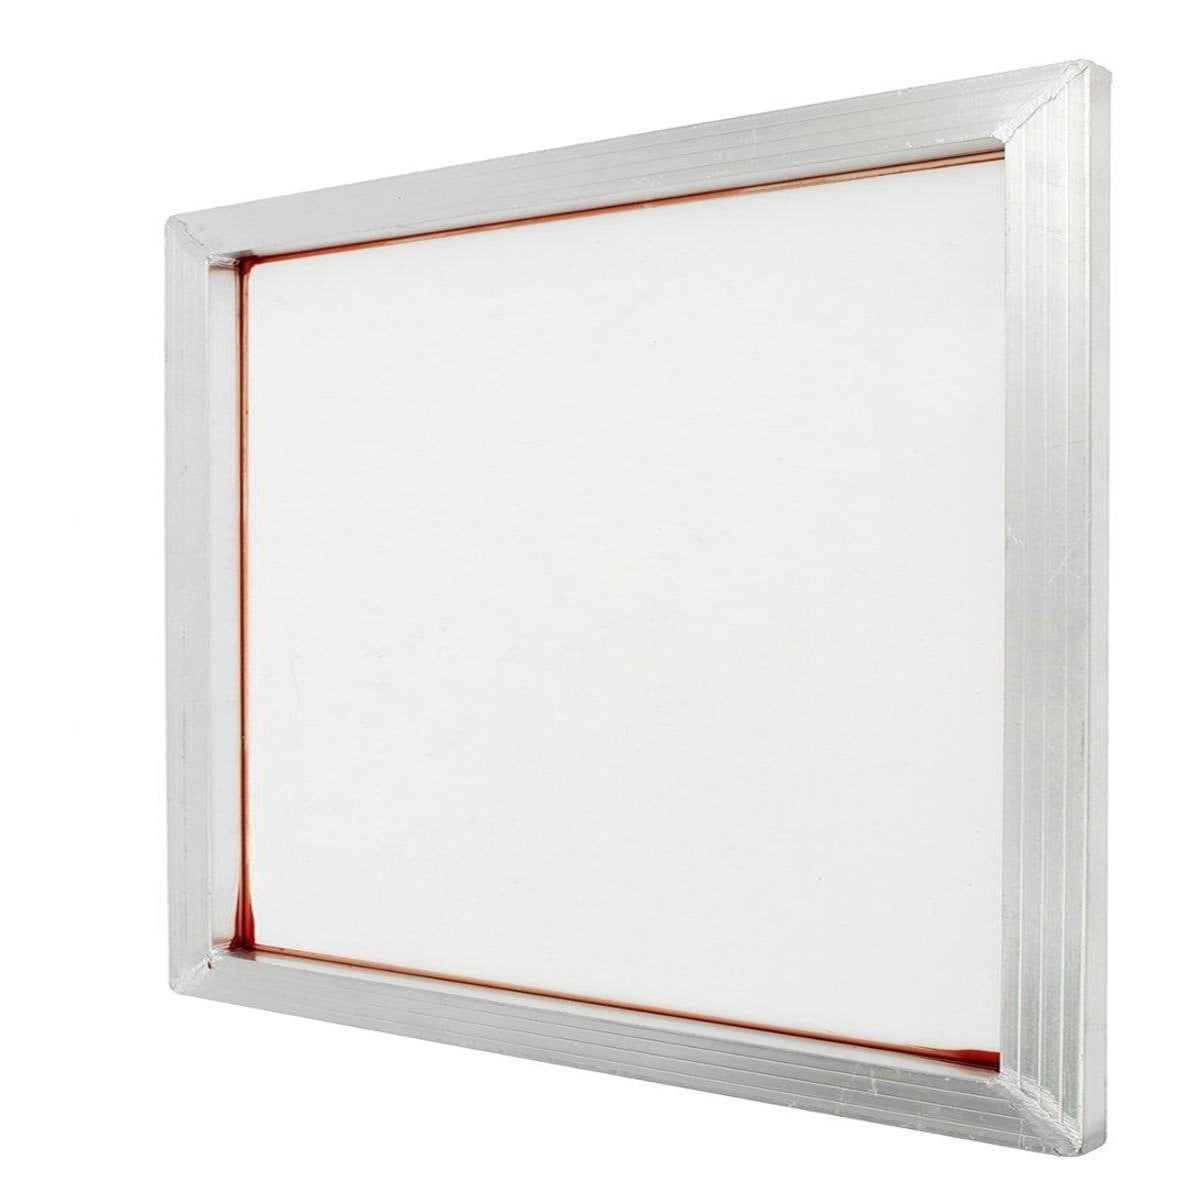 6-pack 20x24 Aluminum Screen Printing Frames w/ 160 tpi White Mesh Pre-stretched 